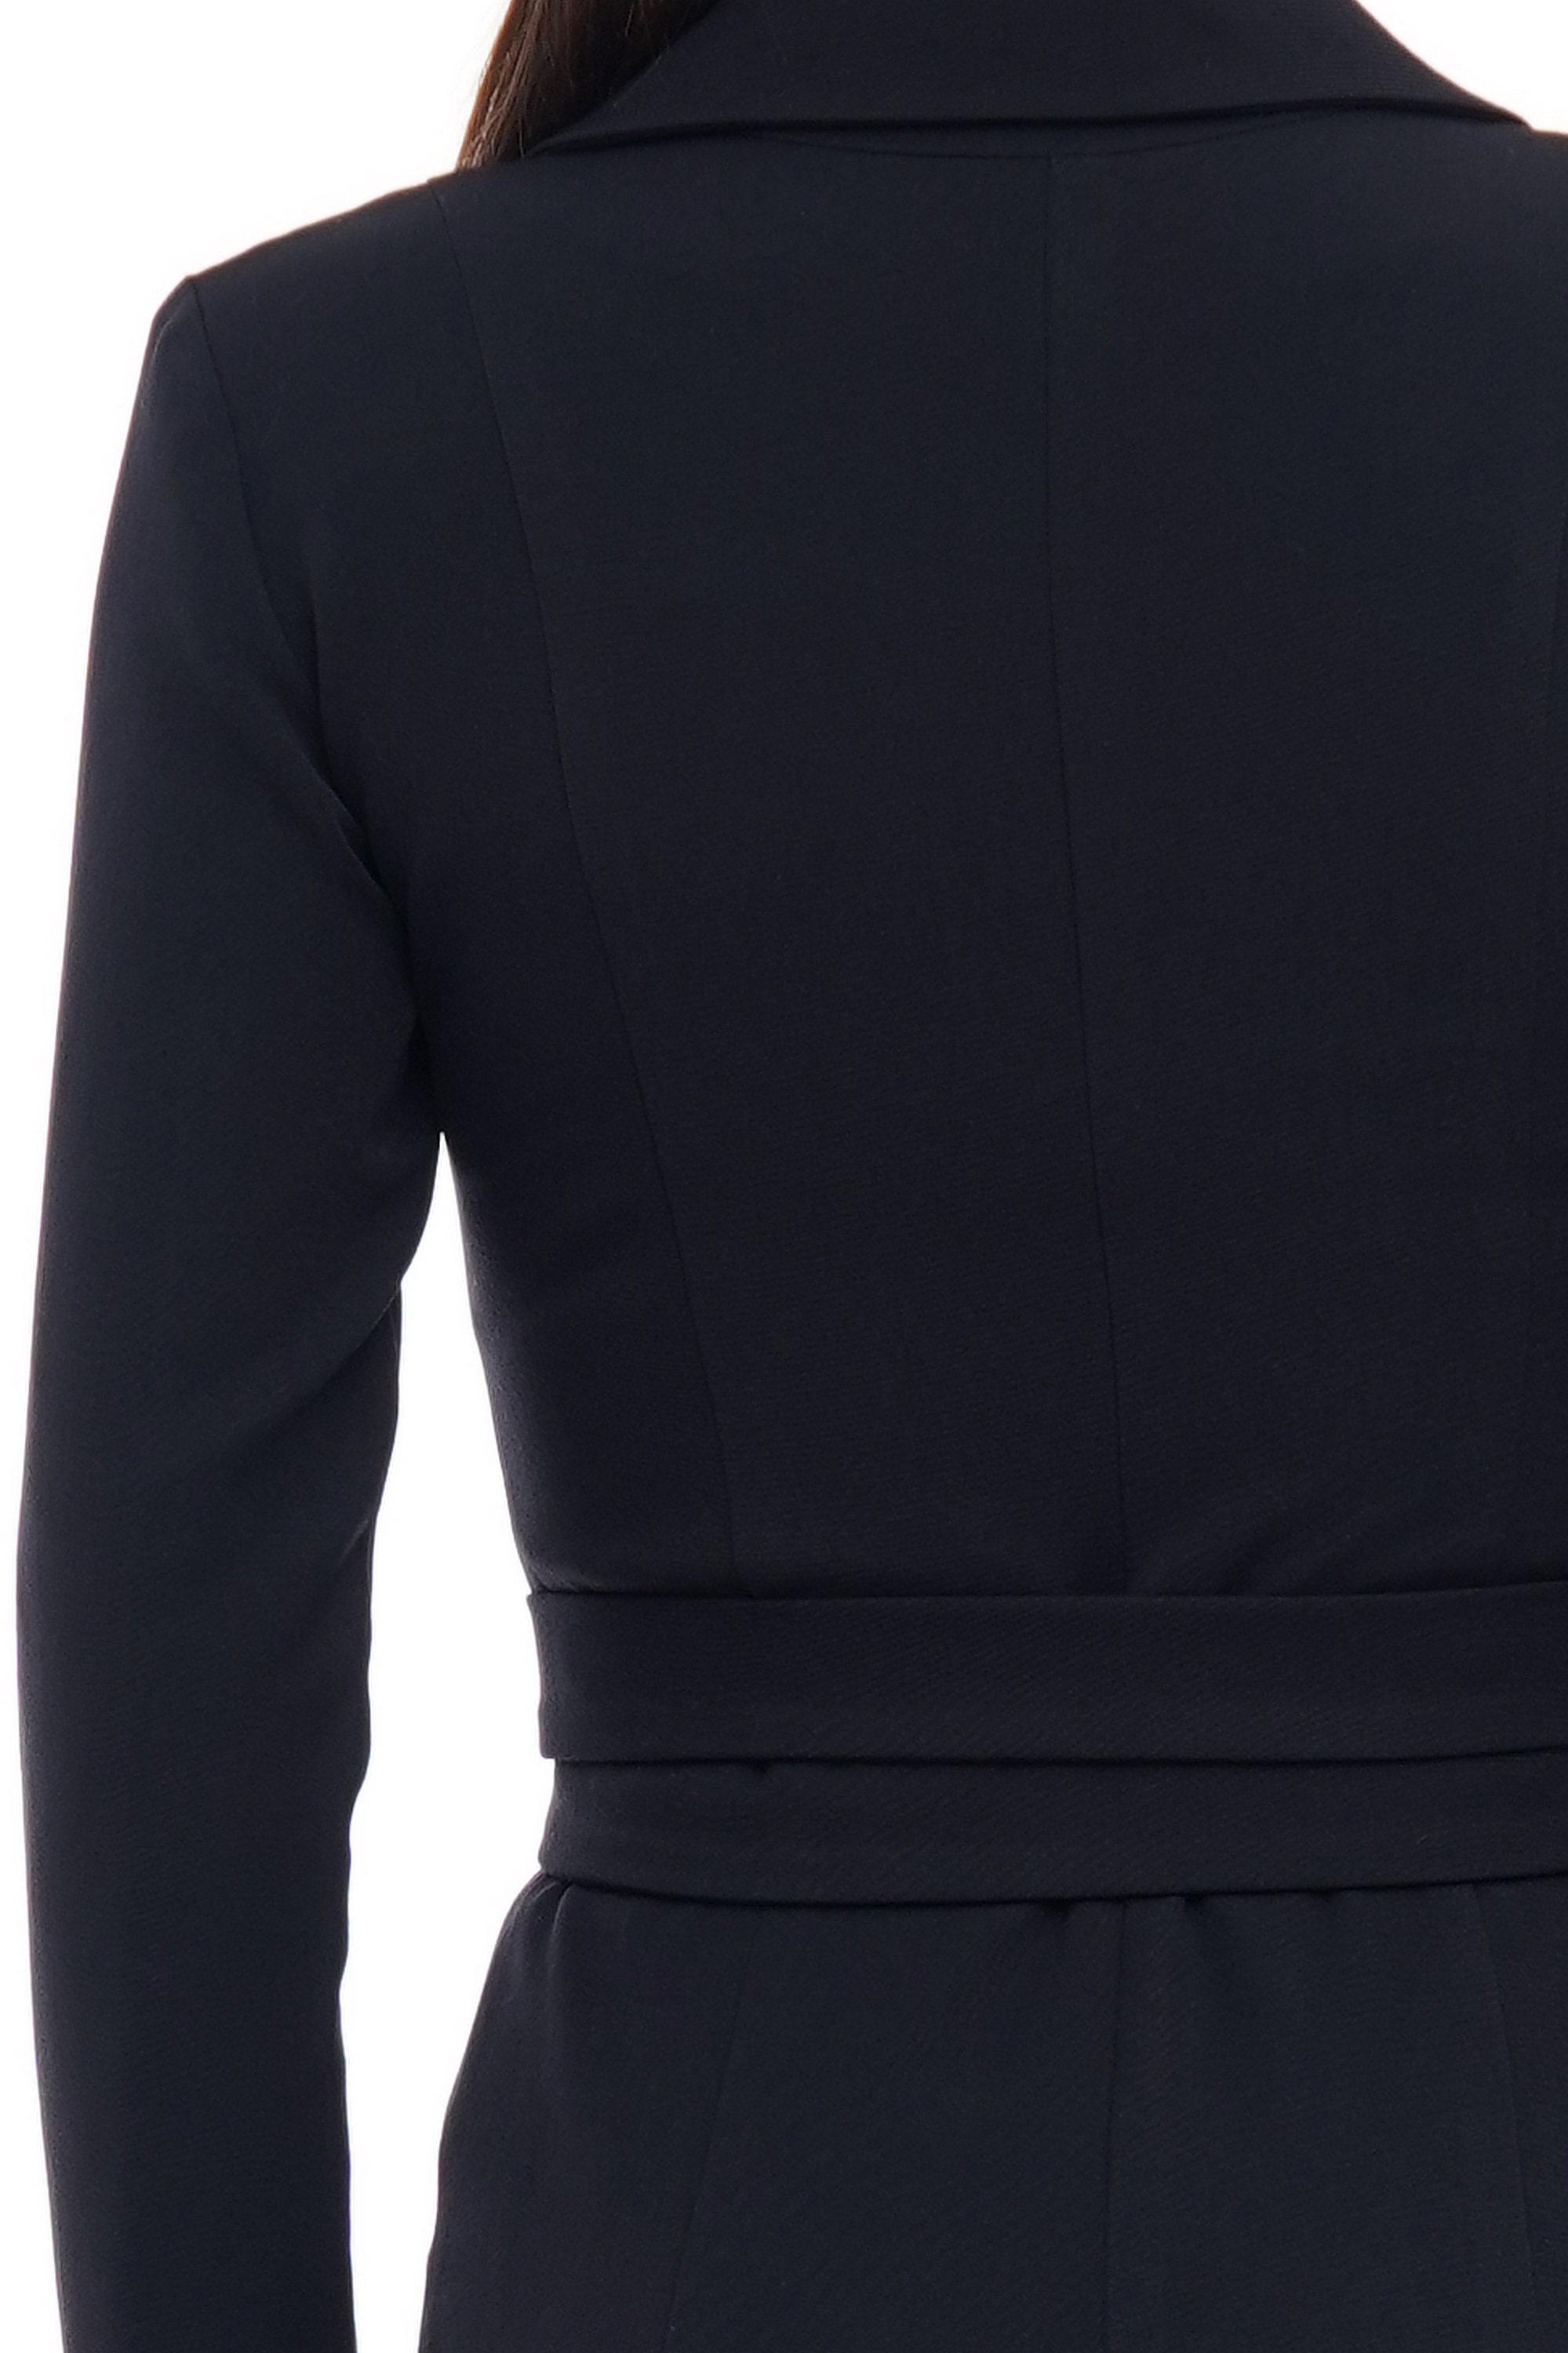 FYR Macedonia Tuxedo Blazer Black 100% Wool Double Breasted Size 2R 